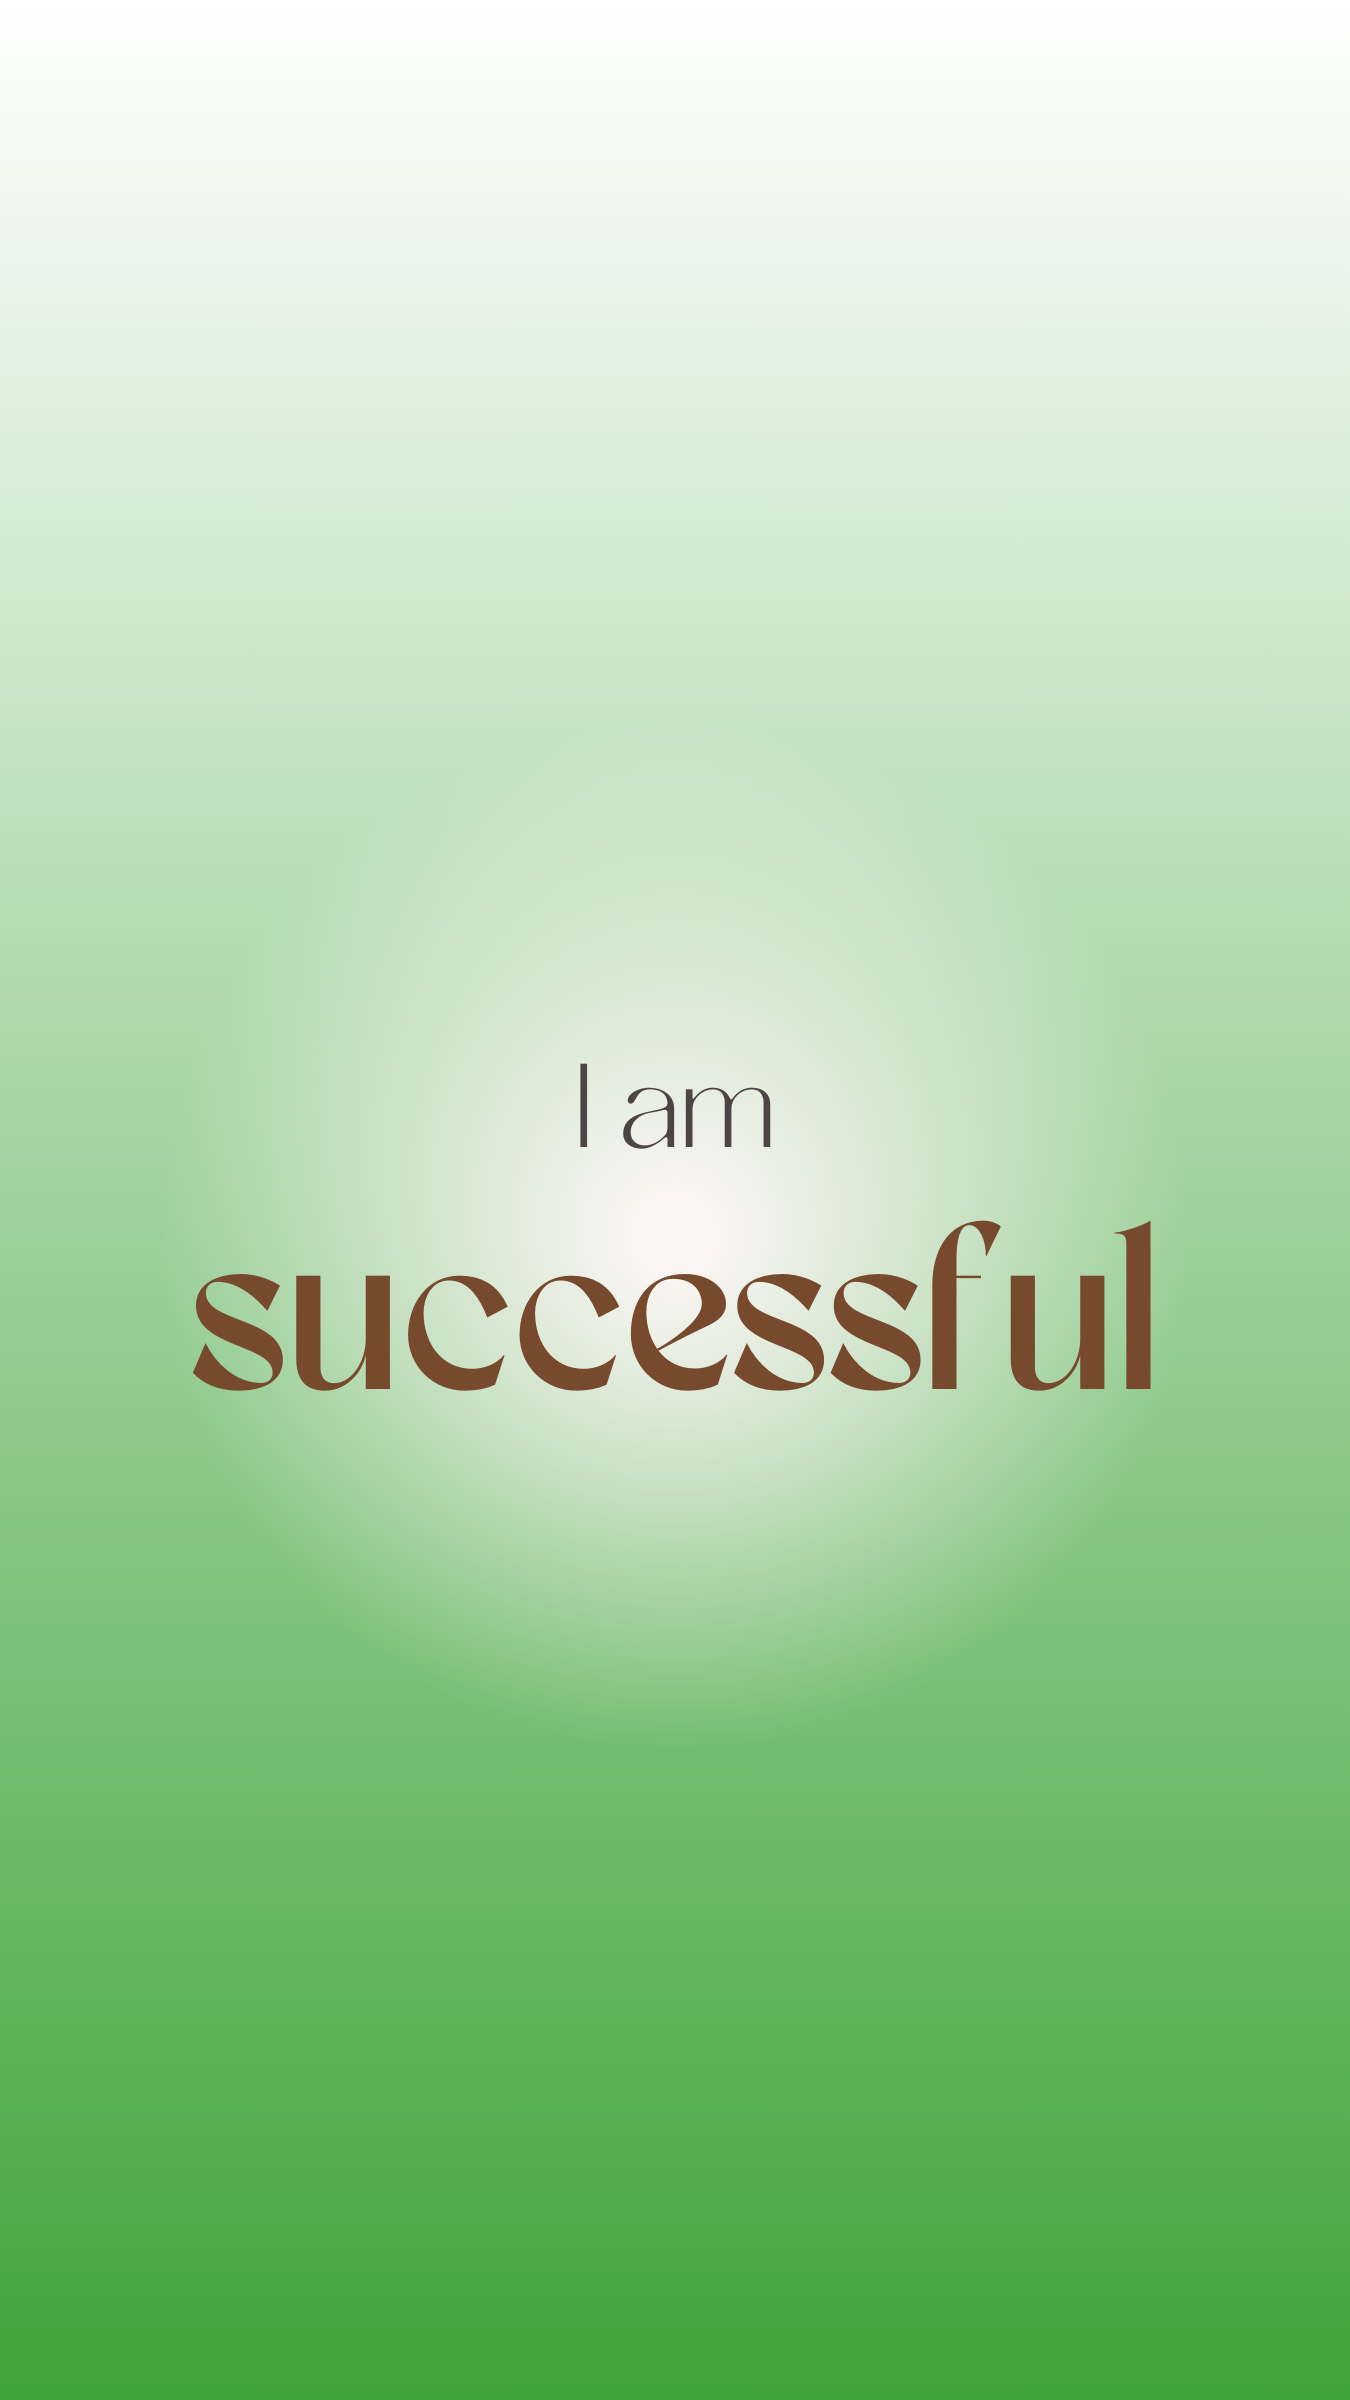 i am successful positive affirmation